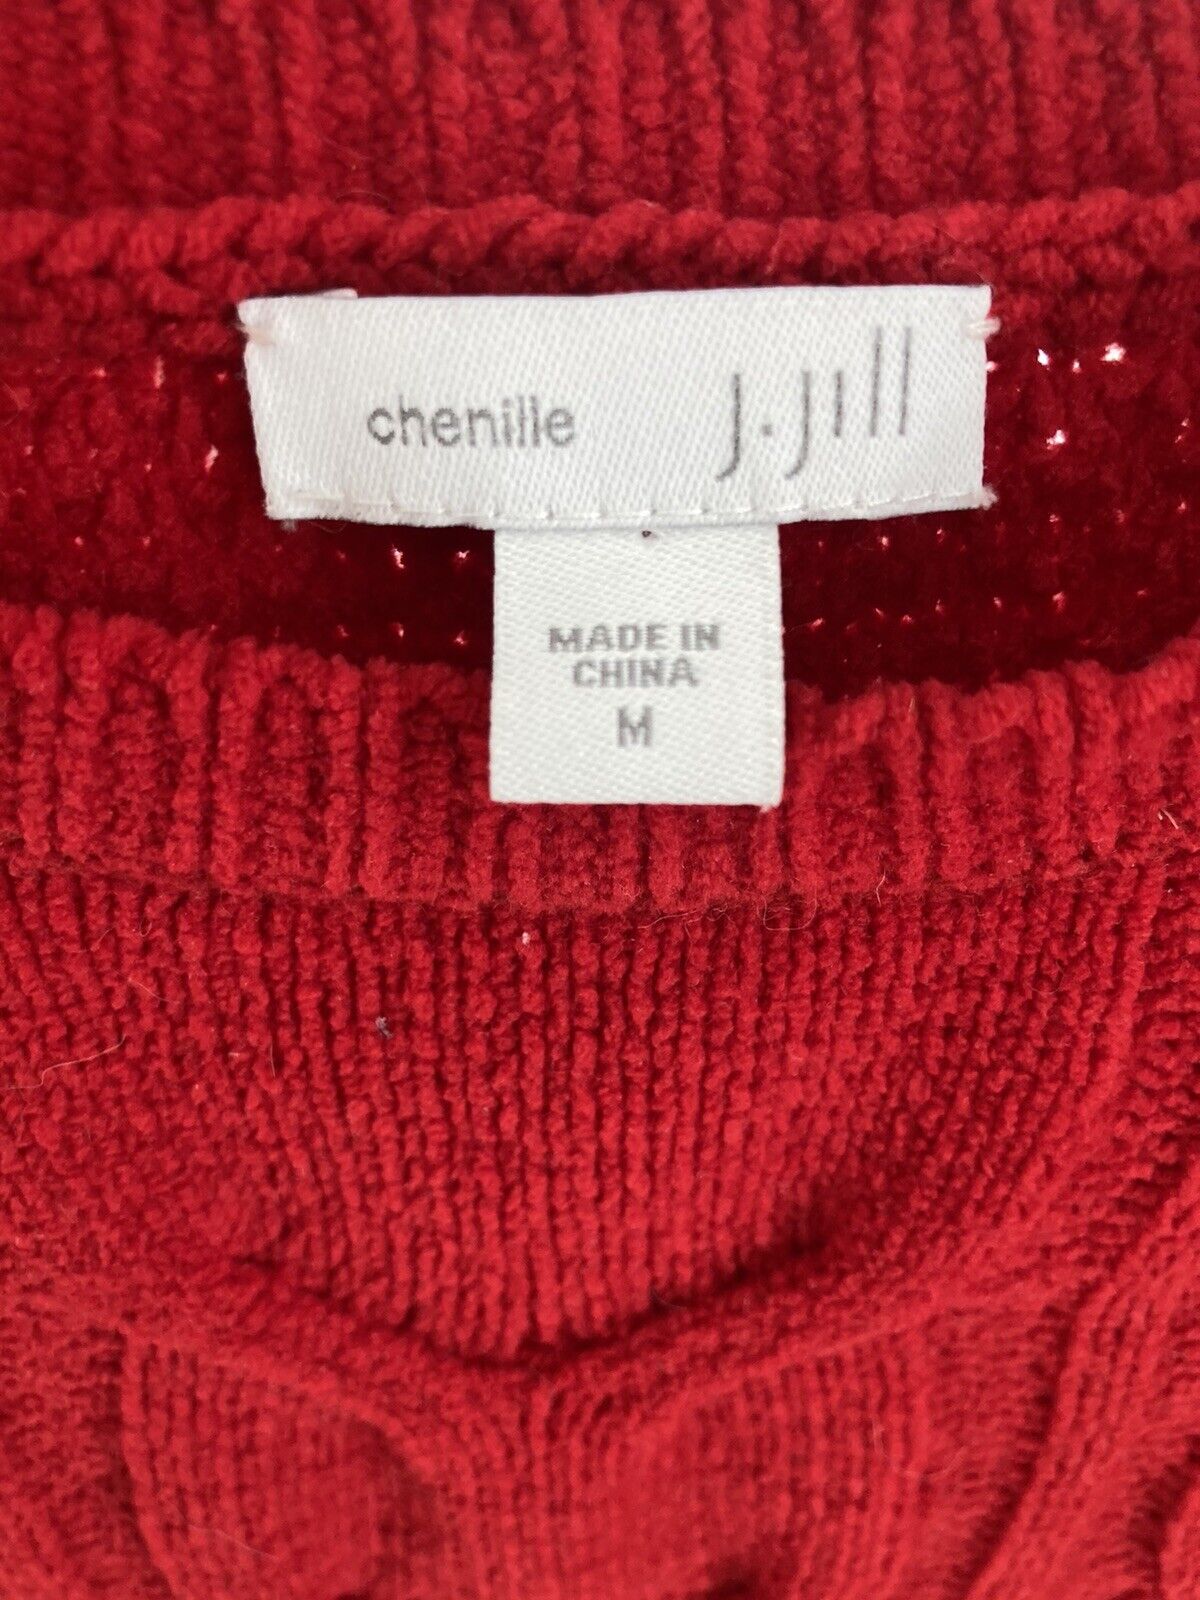 J. Jill Chenille Sweater Size Medium Red